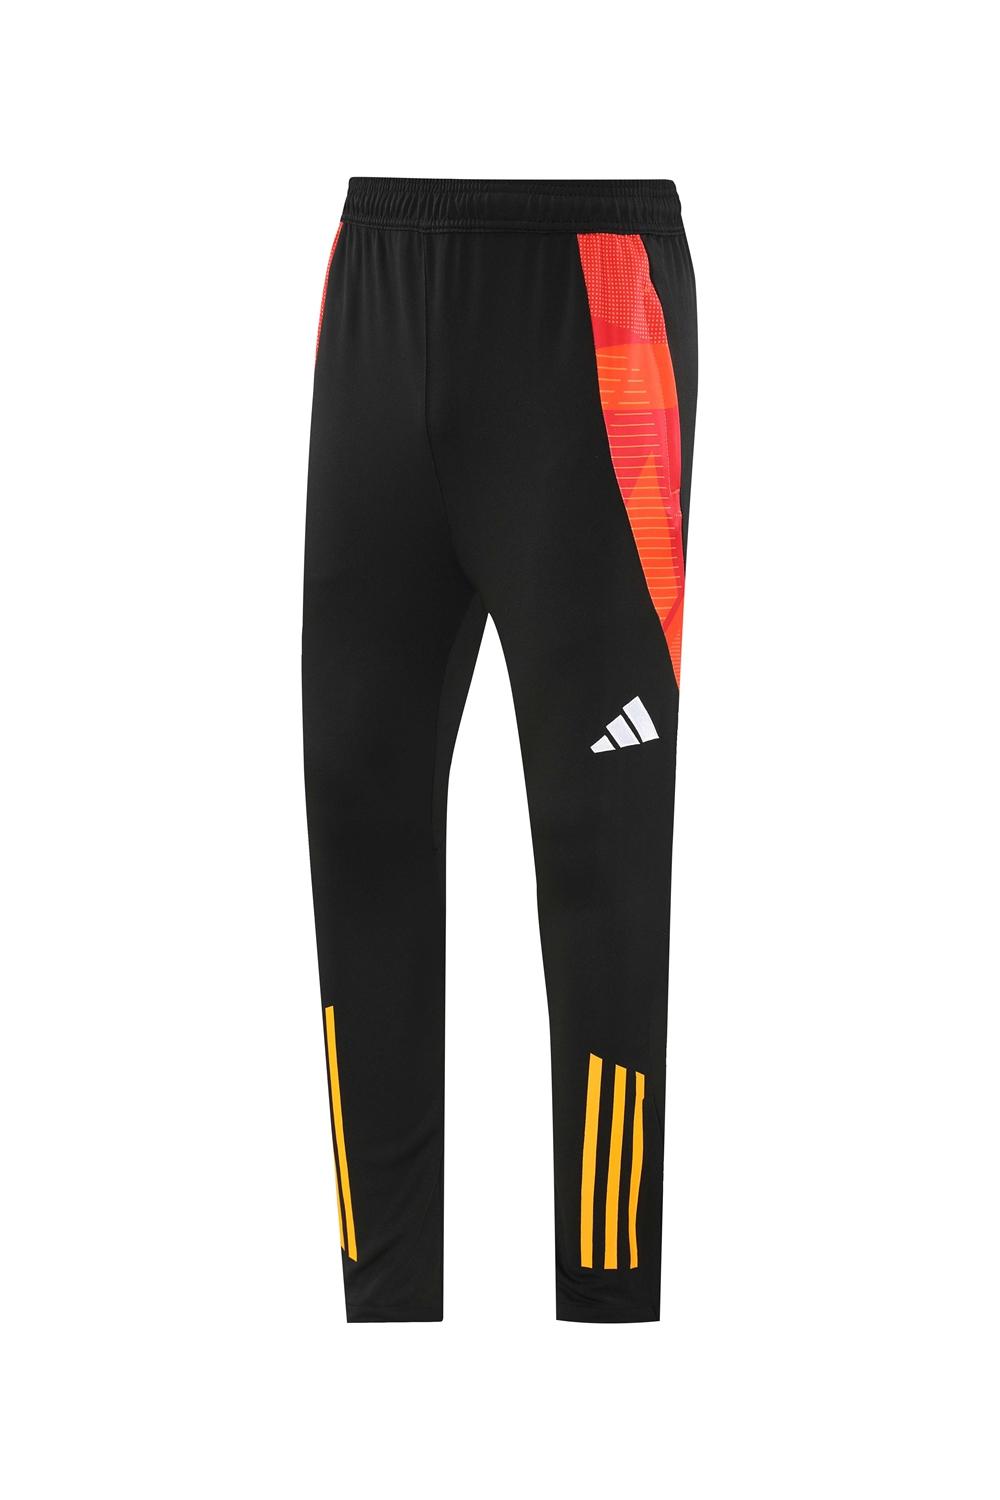 2024 Adidas Red/Yellow Half Zipper Jacket +Long Pants